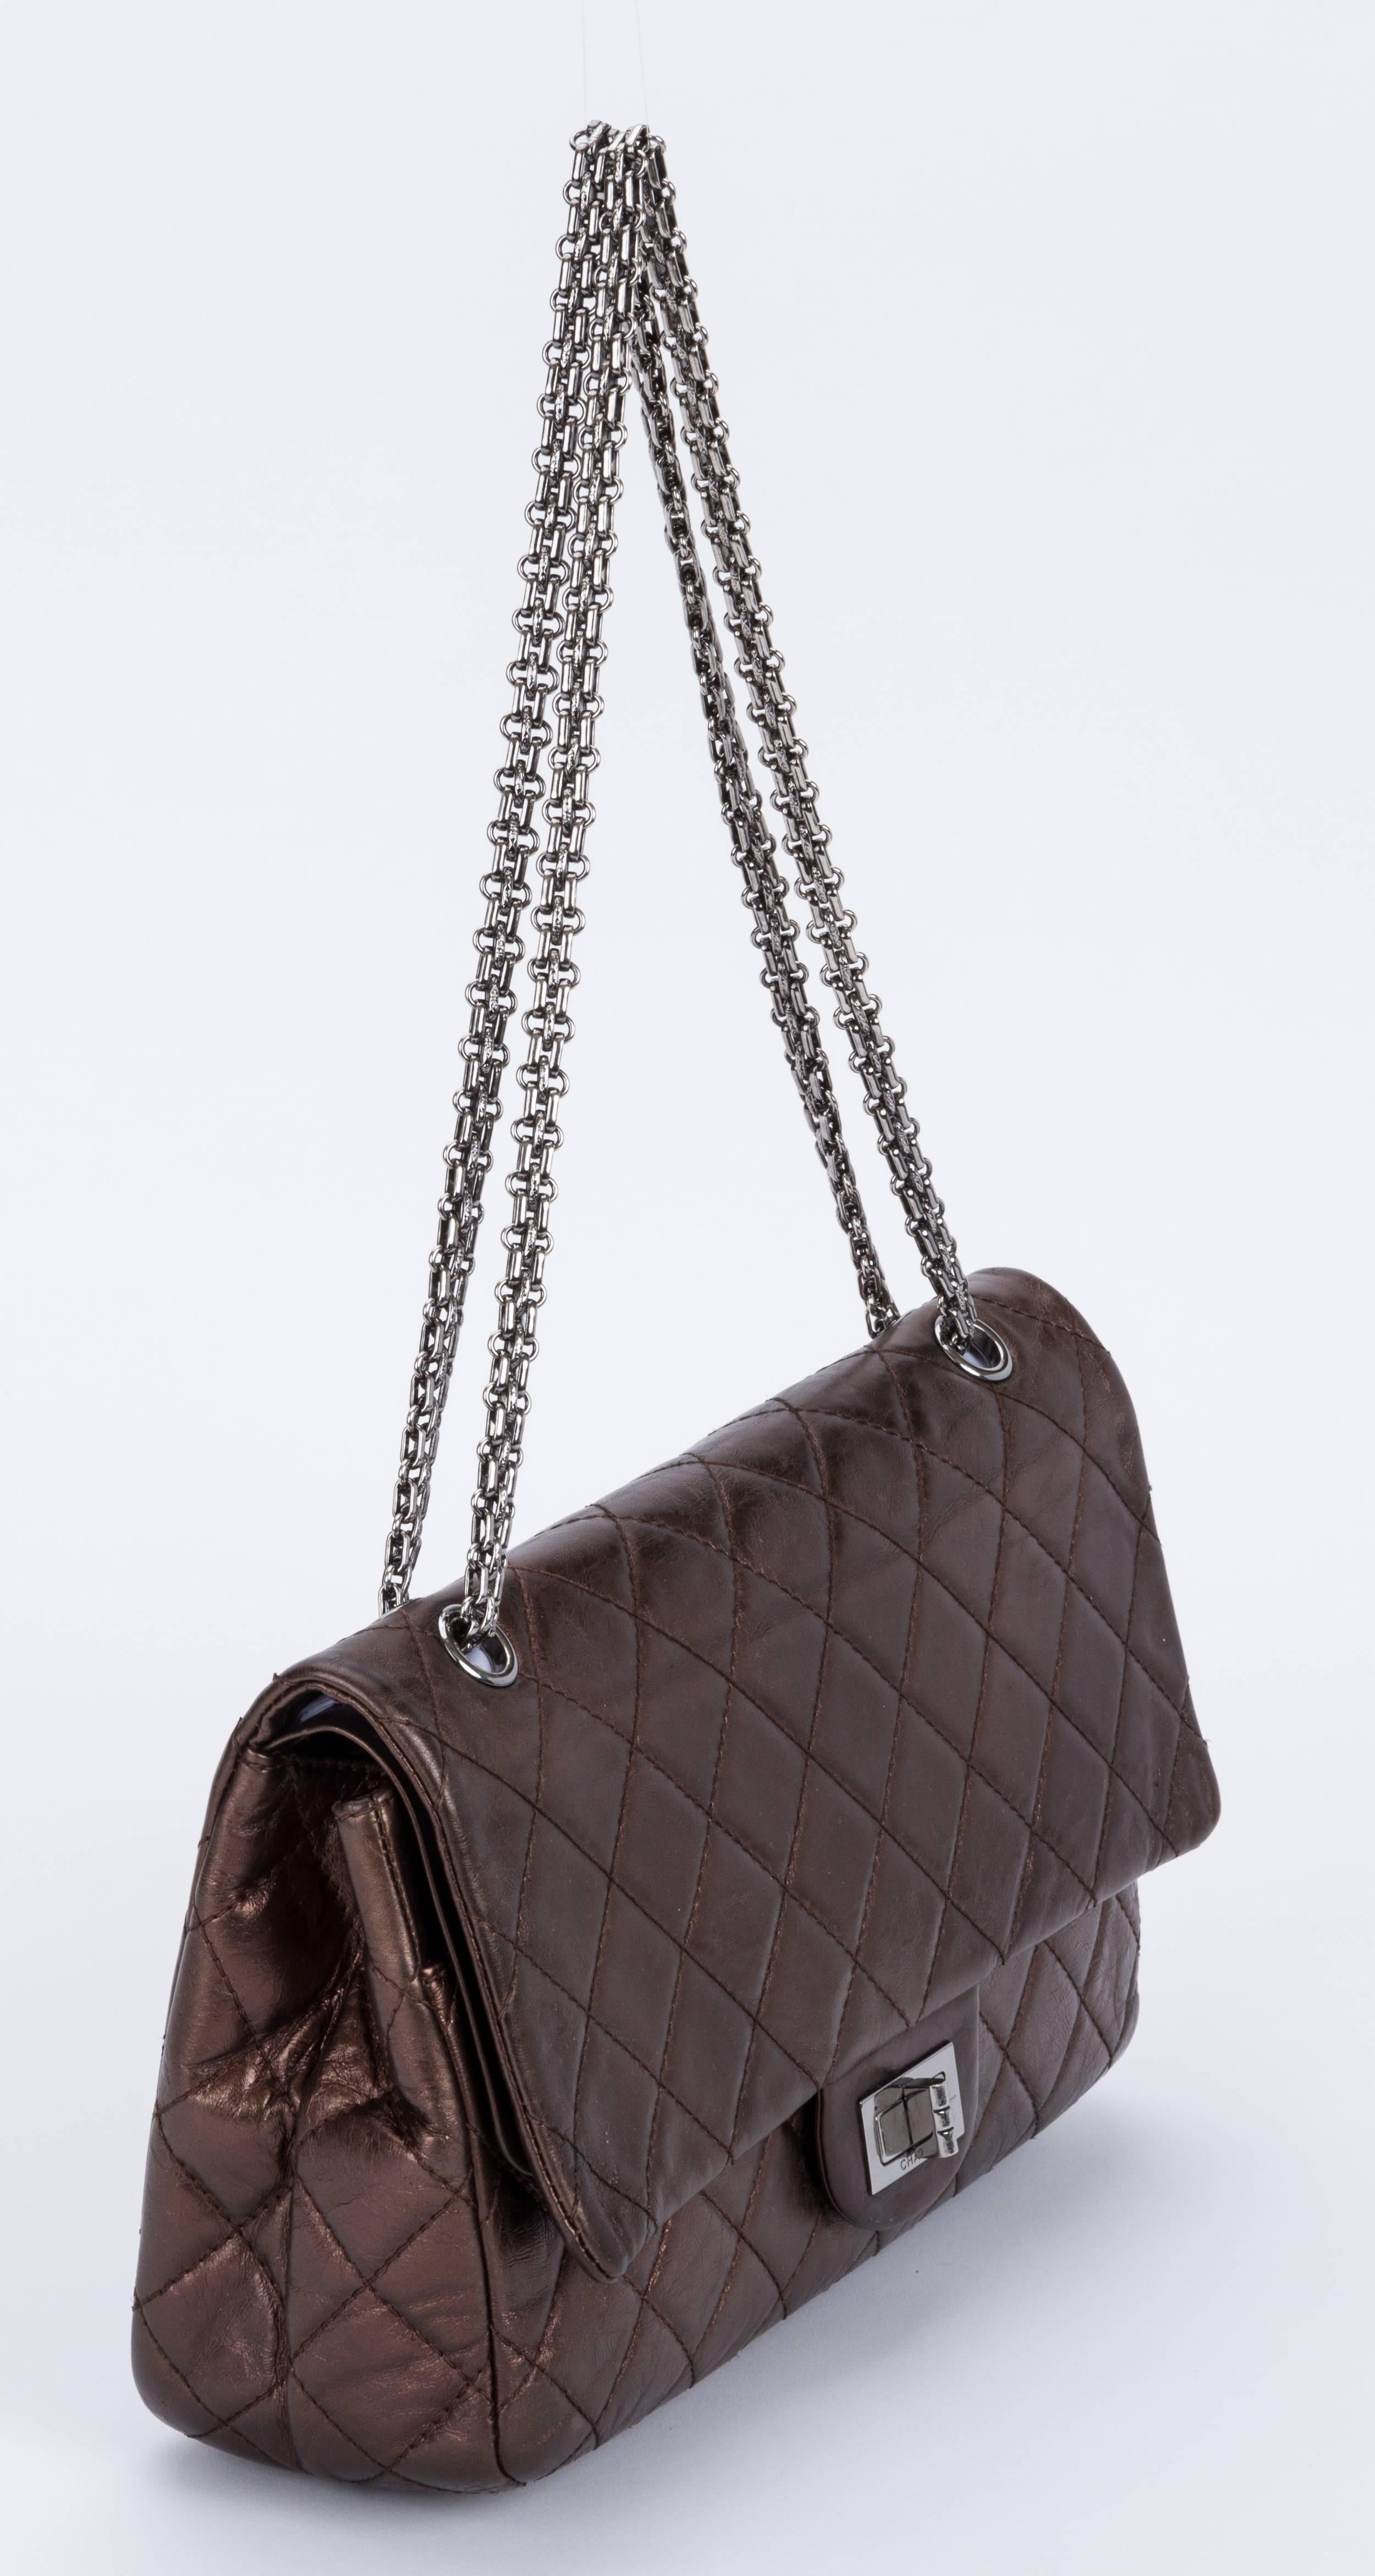 Chanel bronze metallic 2.55 reissue jumbo classic flap bag. Ruthenium hardware. Shoulder drop, 9.5